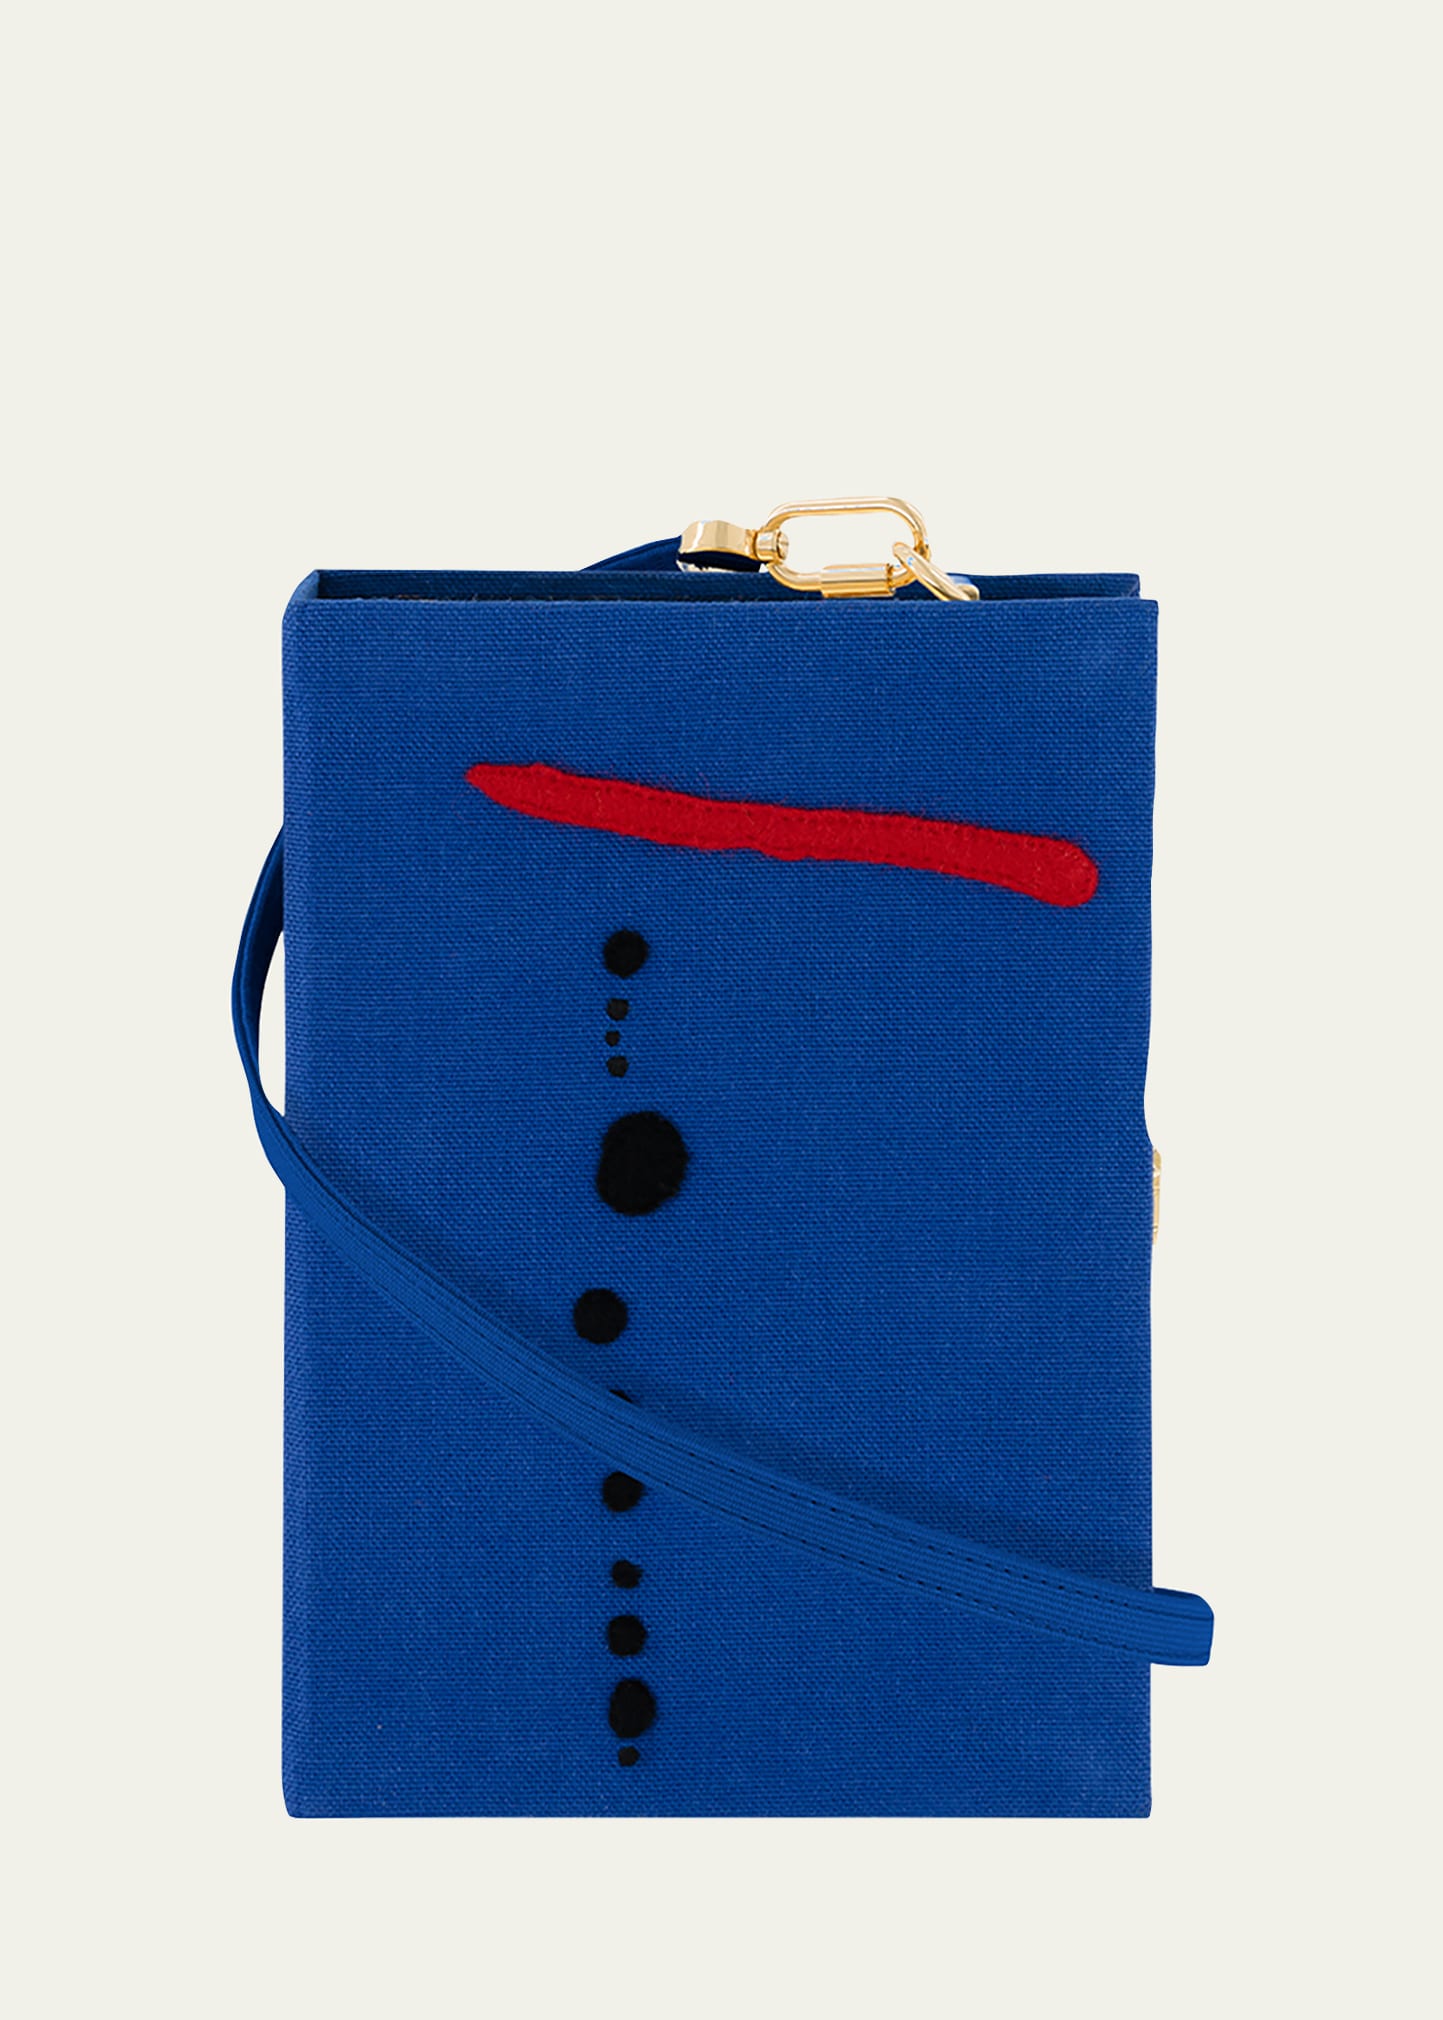 Olympia Le-tan Bleu Ii By Joan Mir&oacute; Book Clutch Bag In Navy Pierre